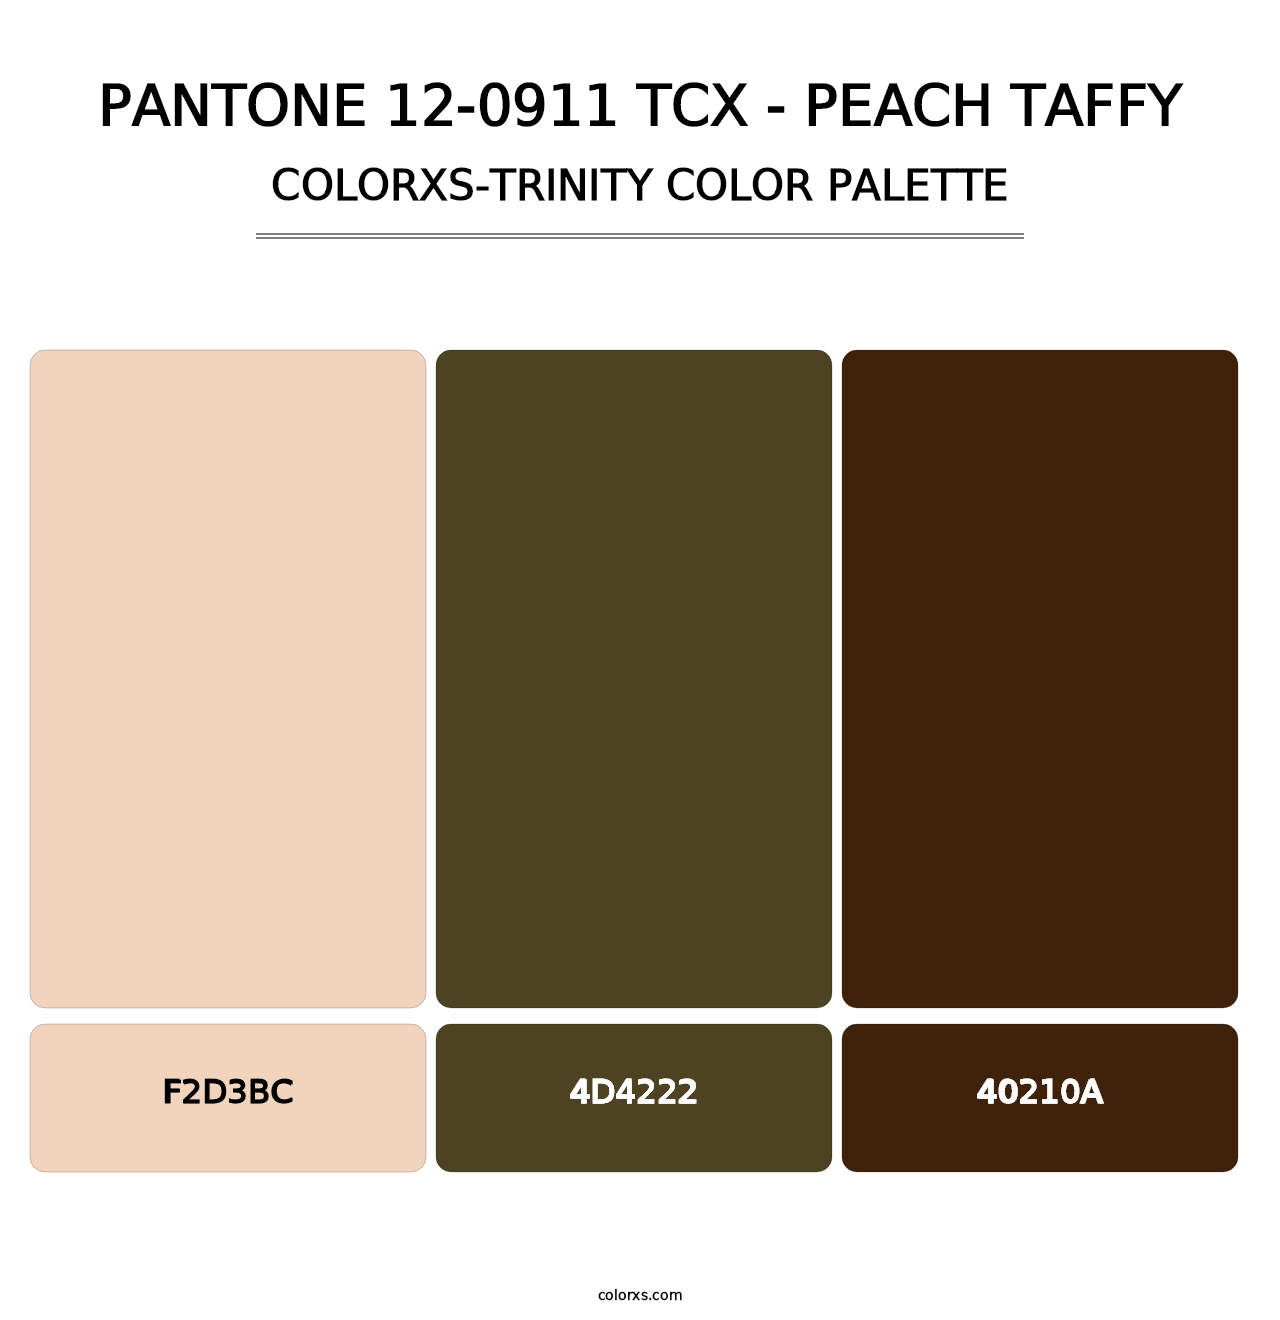 PANTONE 12-0911 TCX - Peach Taffy - Colorxs Trinity Palette